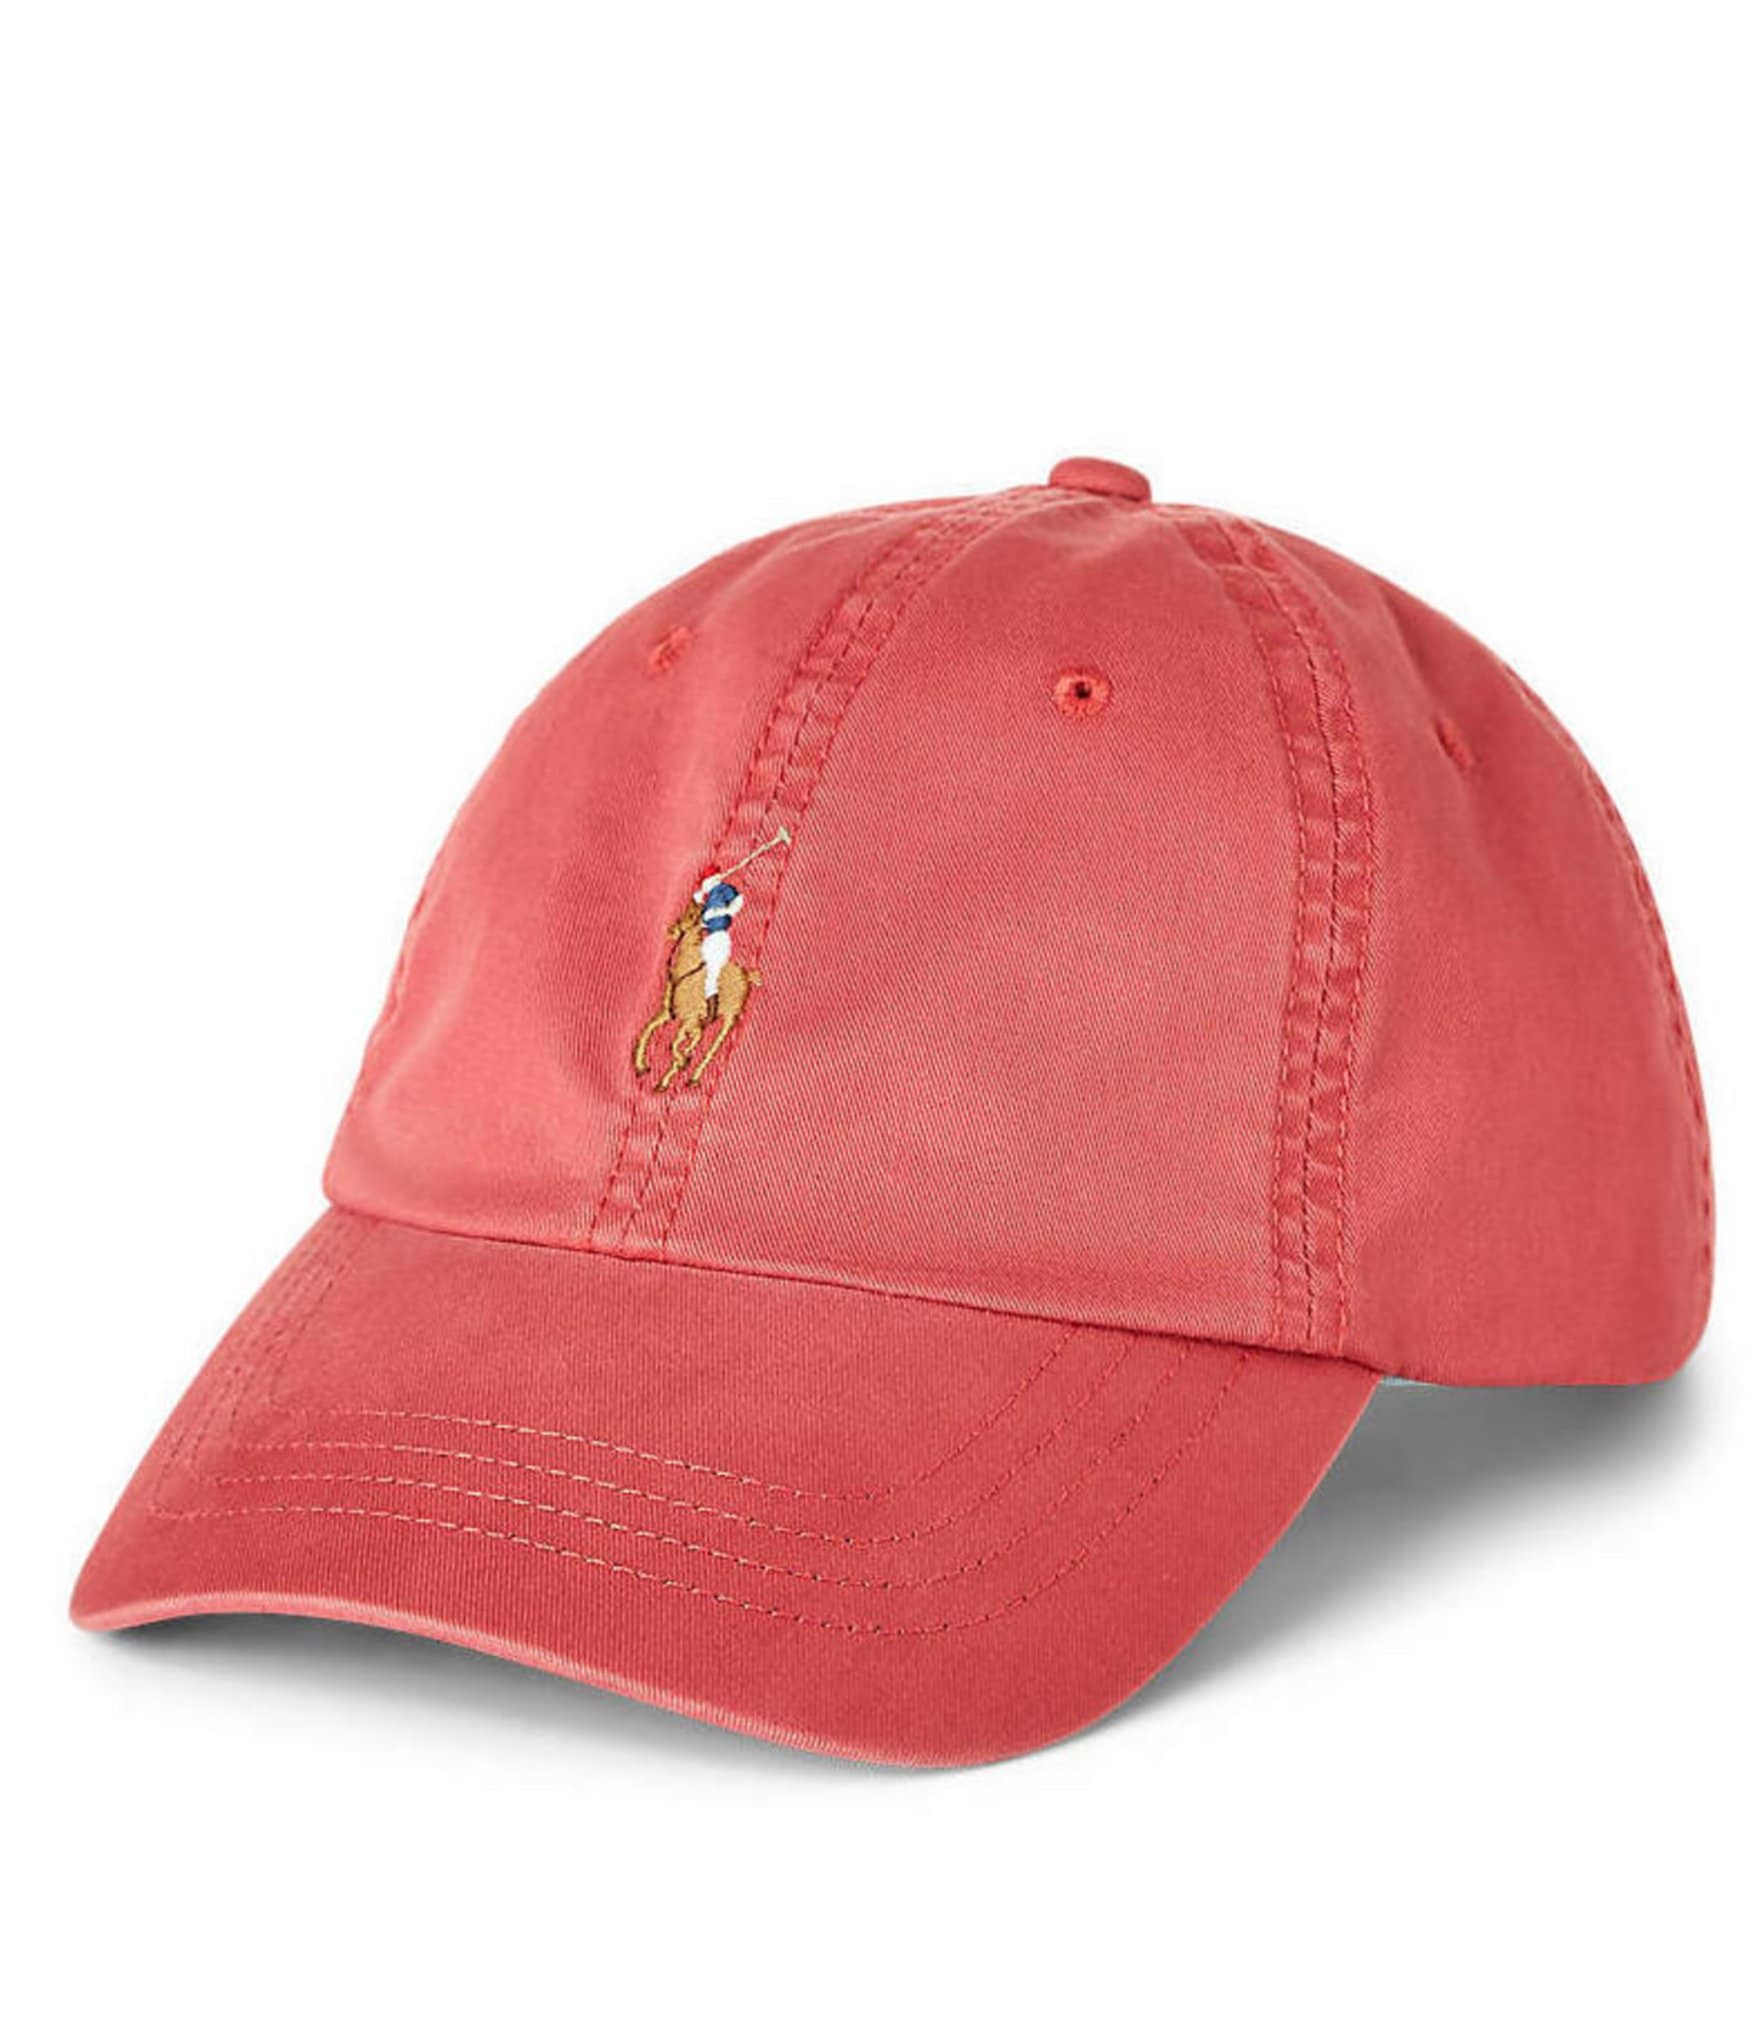 discount 79% NoName hat and cap Multicolored Single WOMEN FASHION Accessories Hat and cap Multicolored 